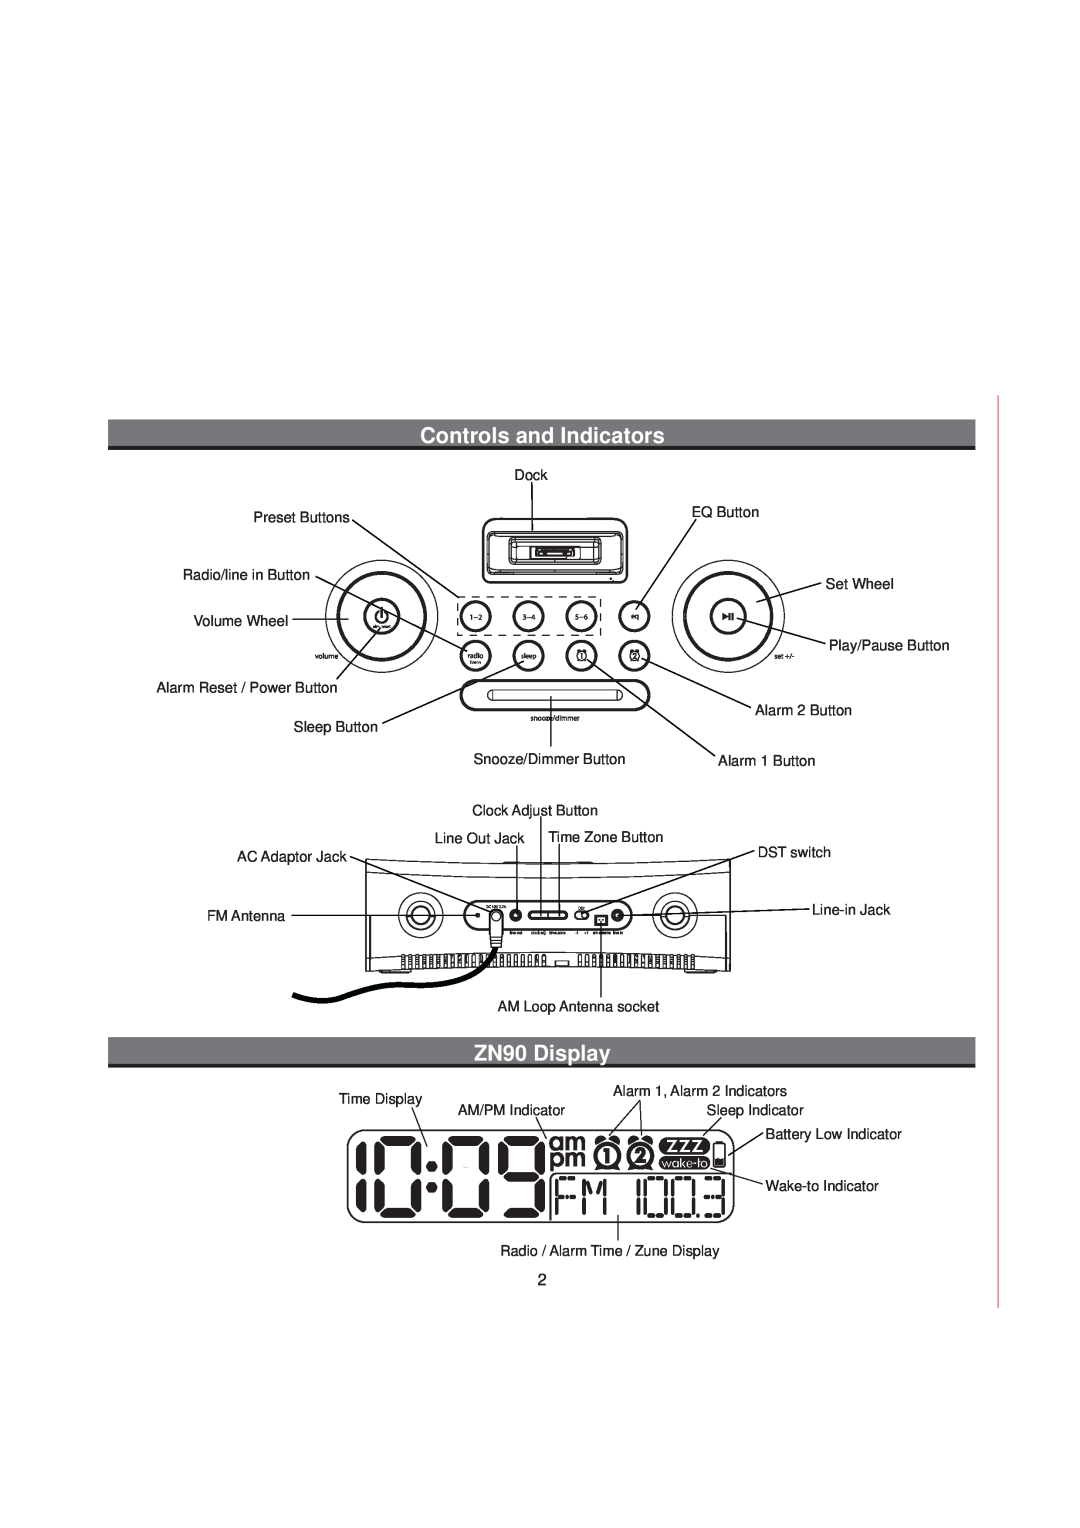 iHome manual Controls and Indicators, ZN90 Display 